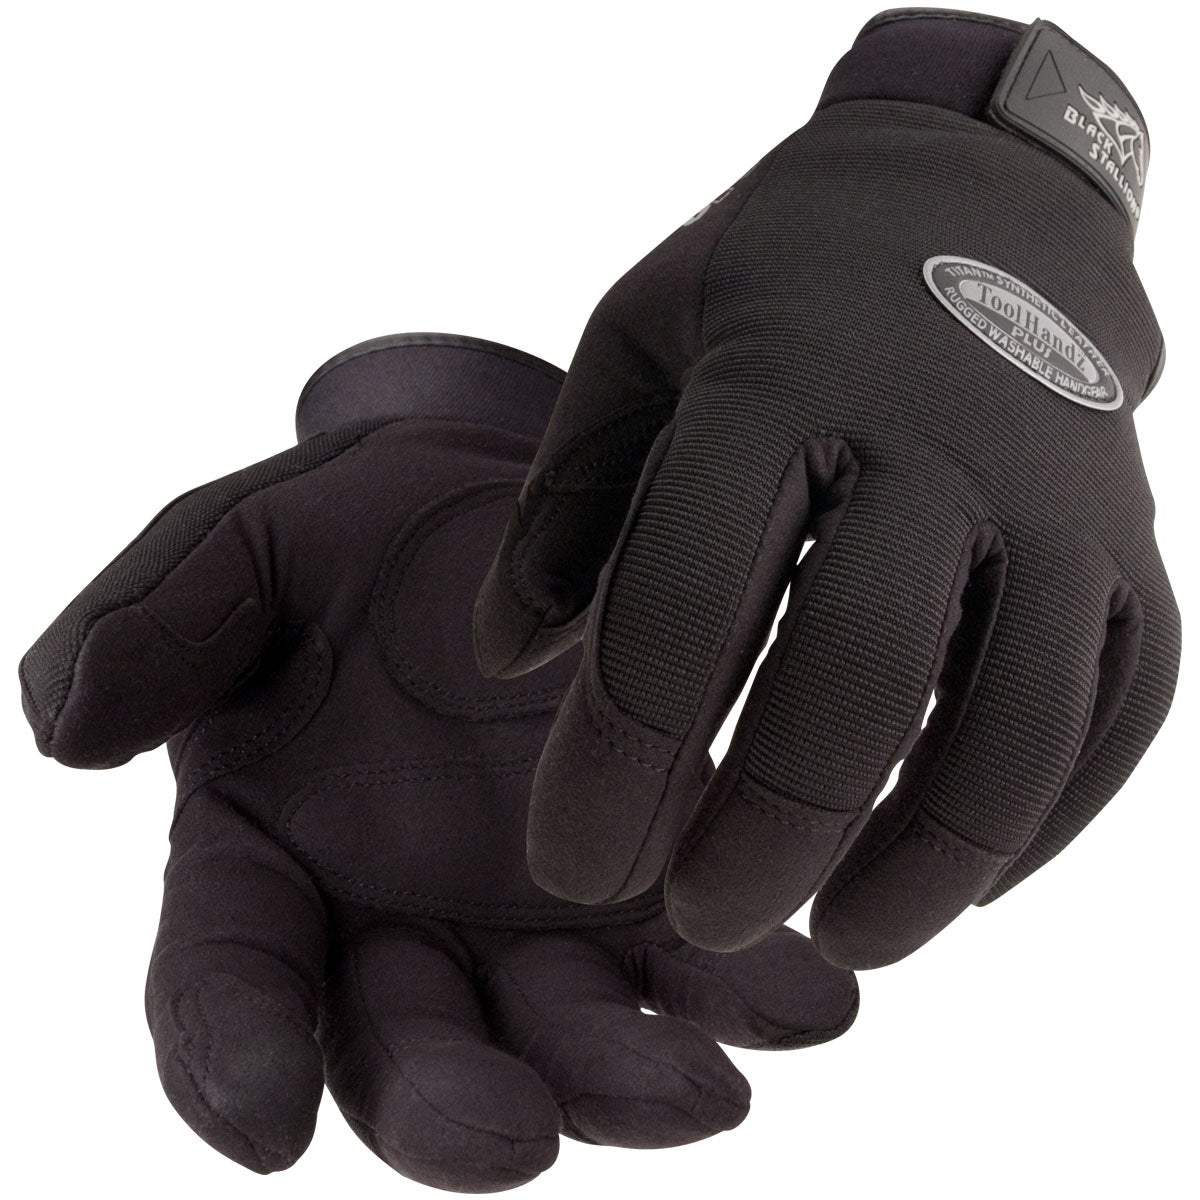 Mechanics/Automotive Gloves